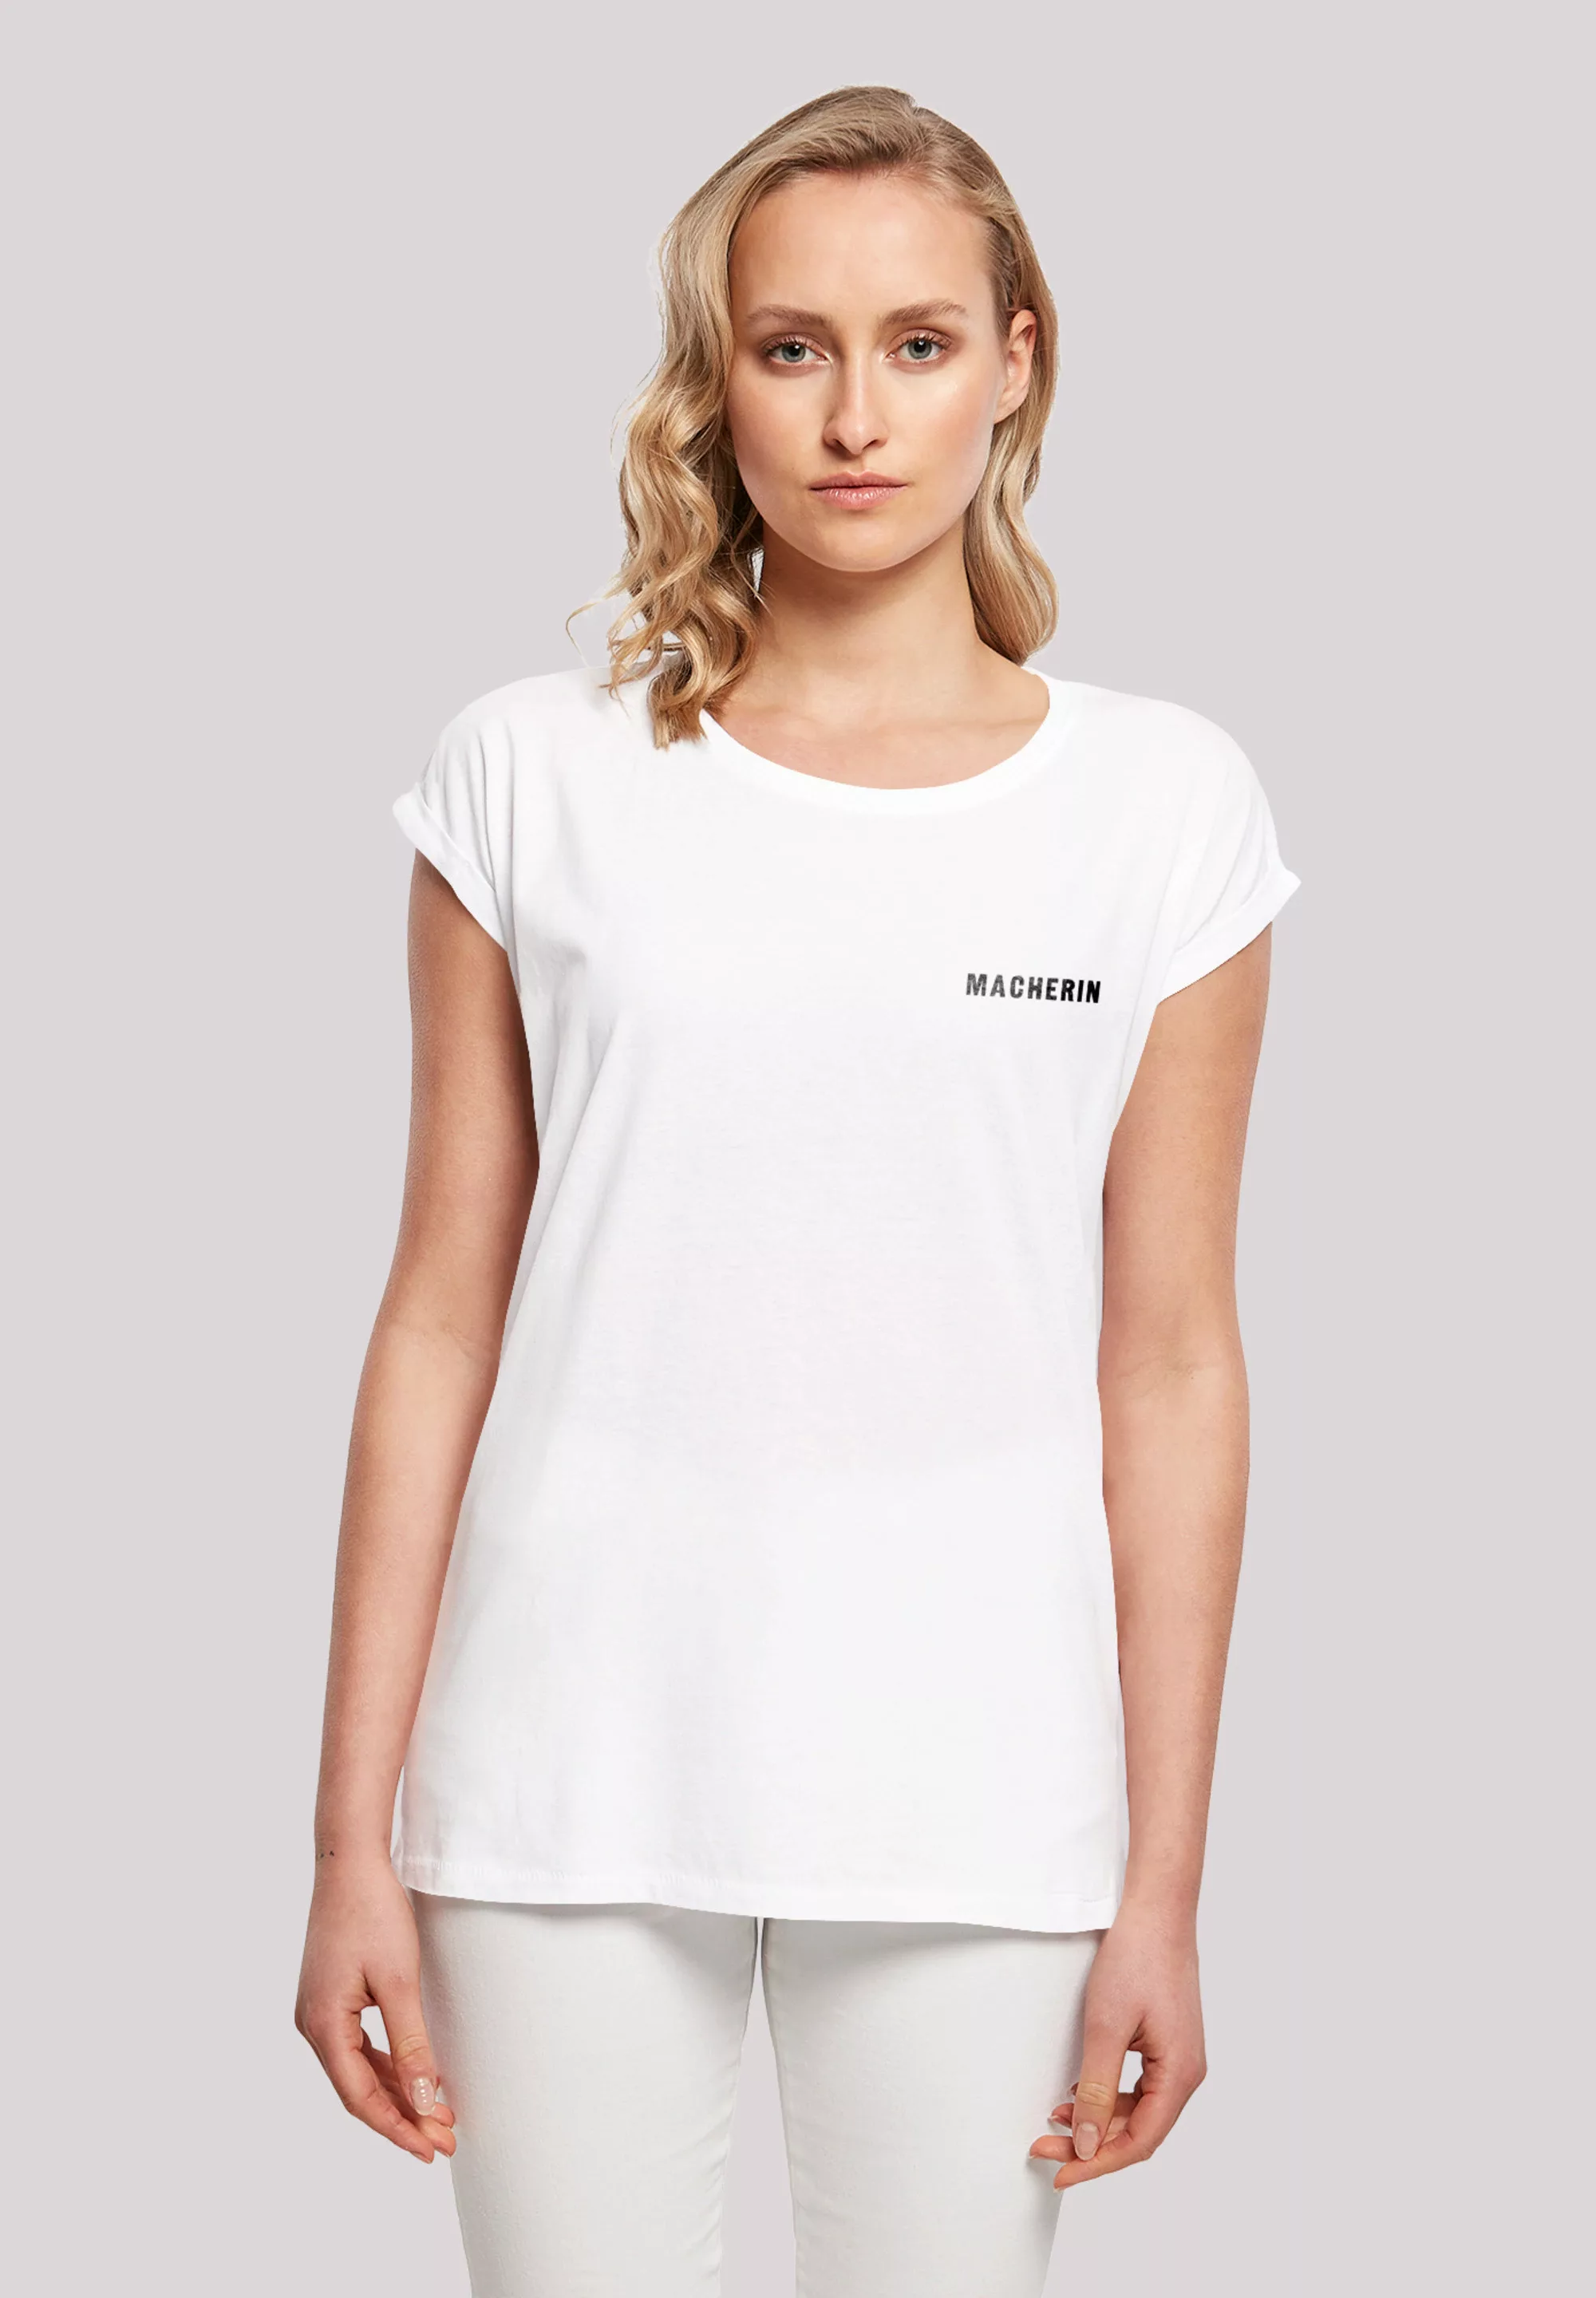 F4NT4STIC T-Shirt "Macherin", Jugendwort 2022, slang günstig online kaufen